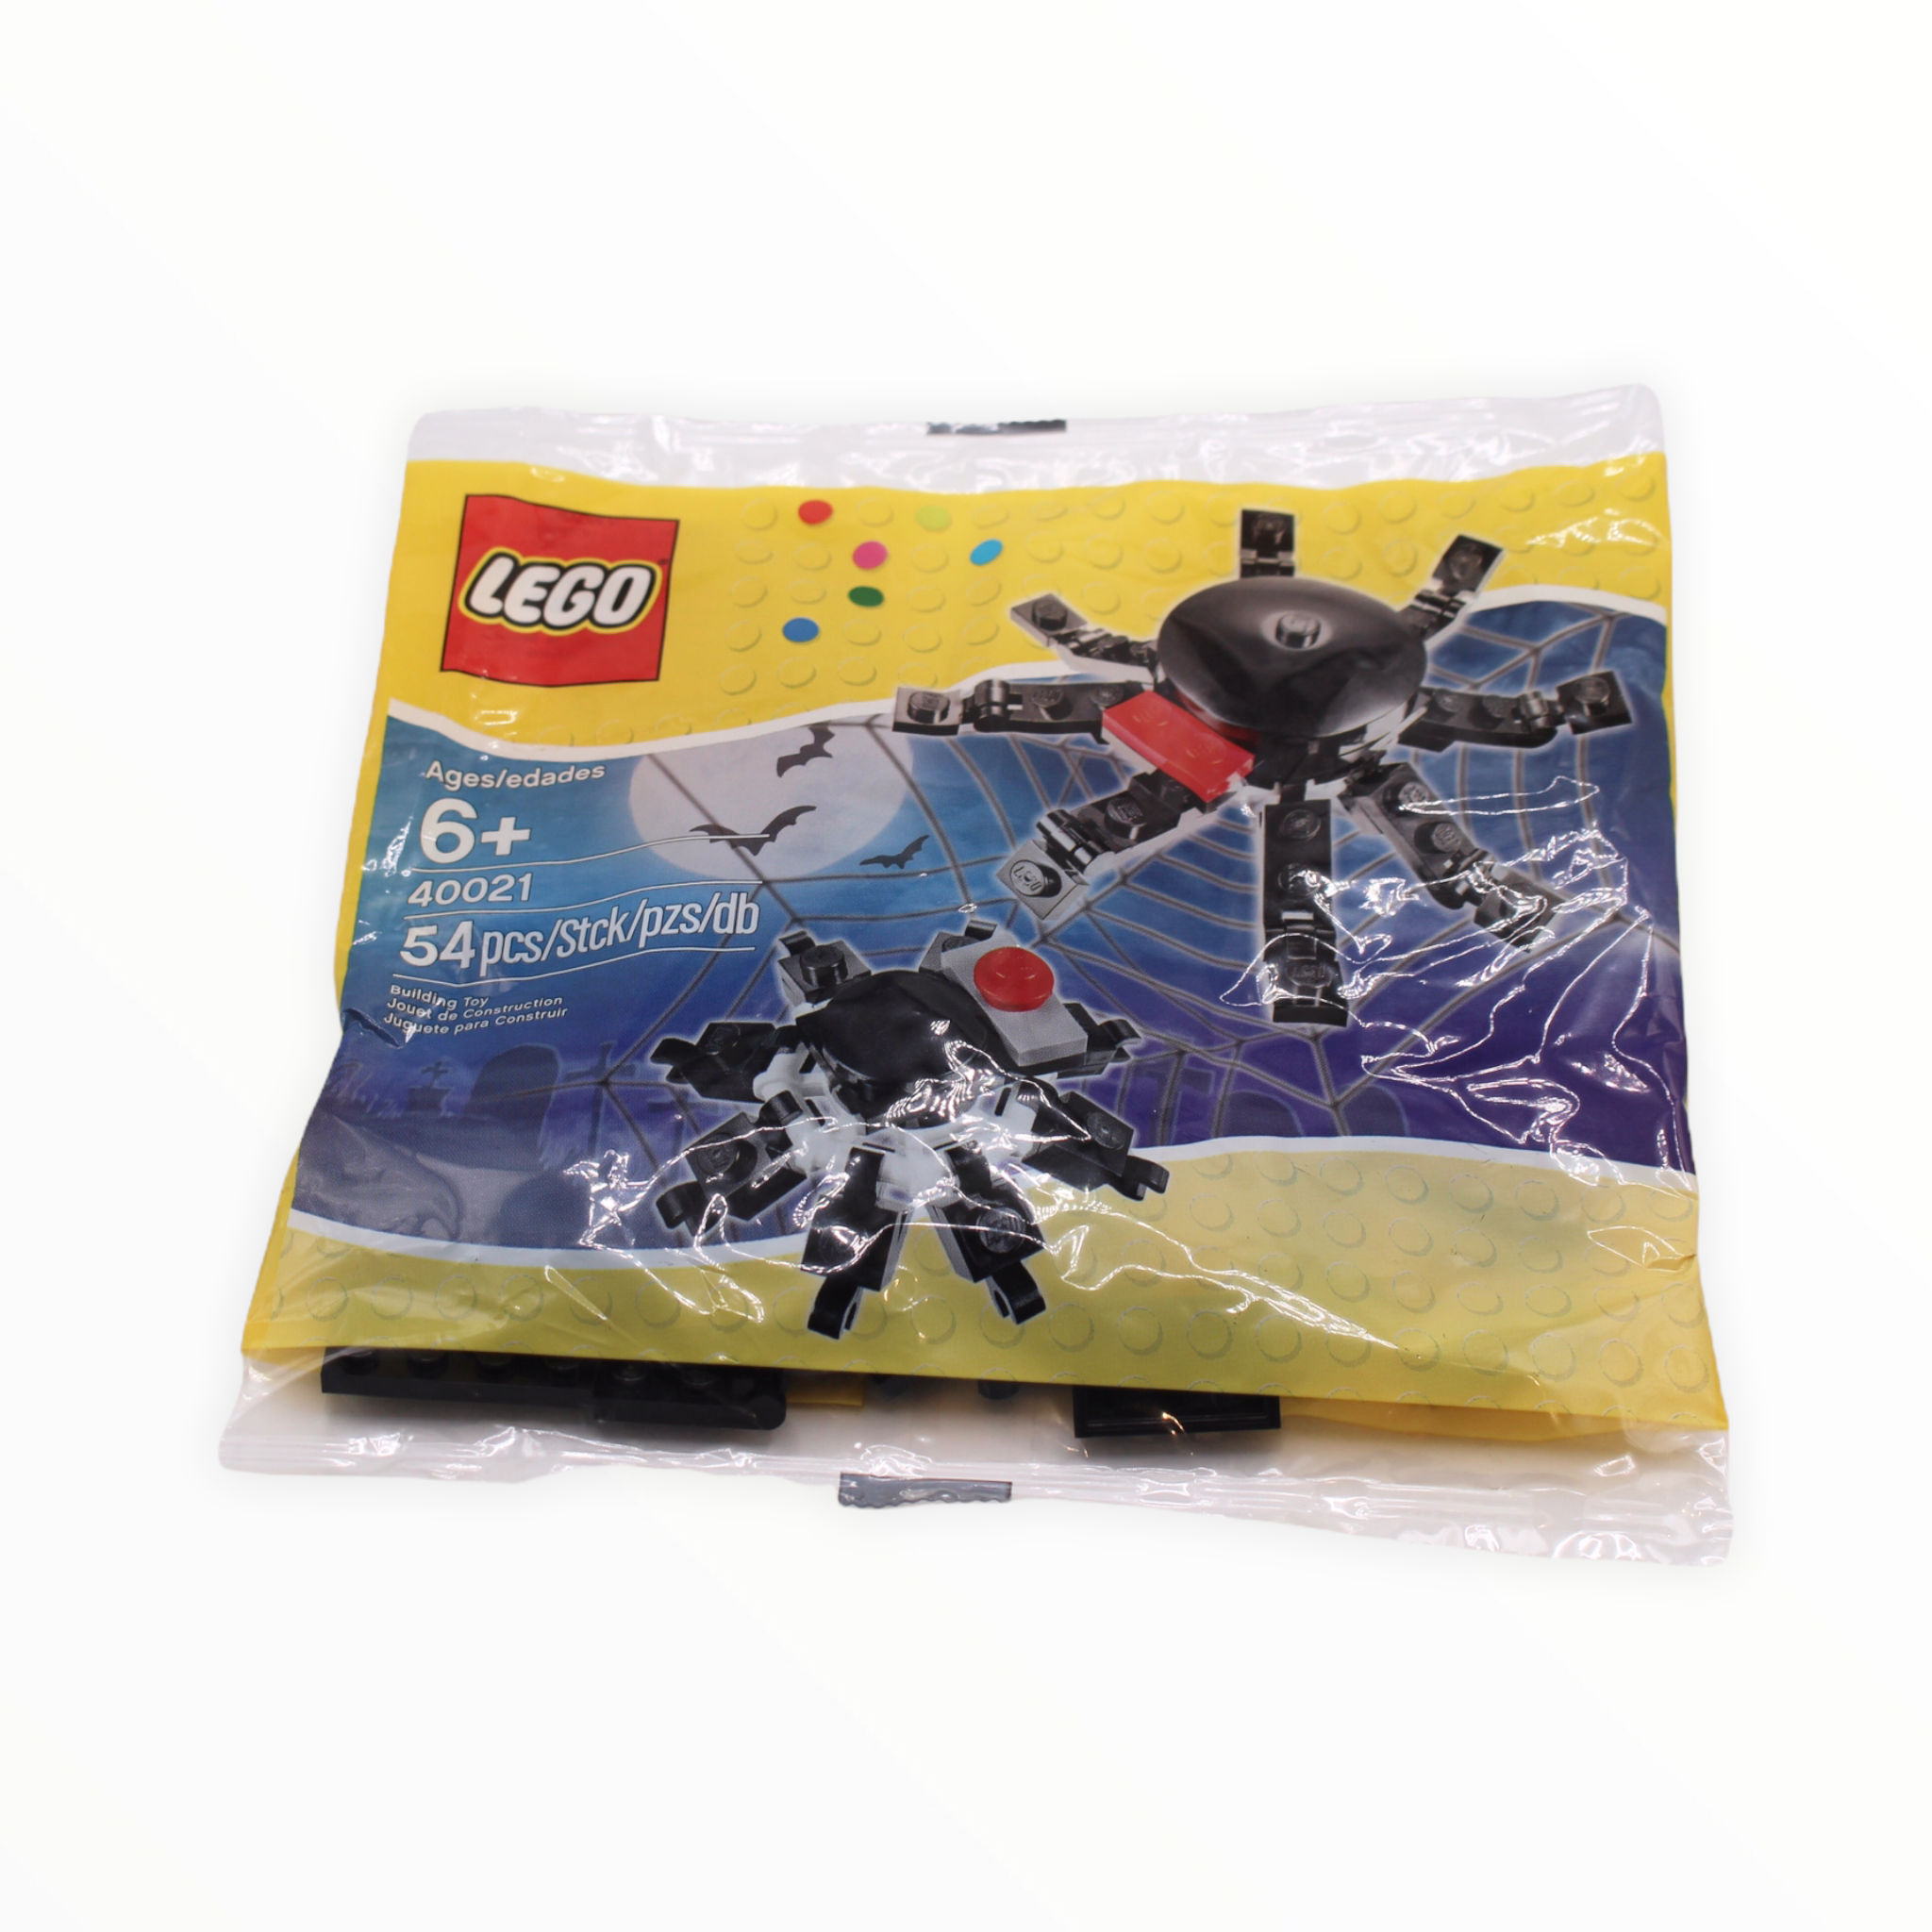 Polybag 40021 LEGO Spiders Set